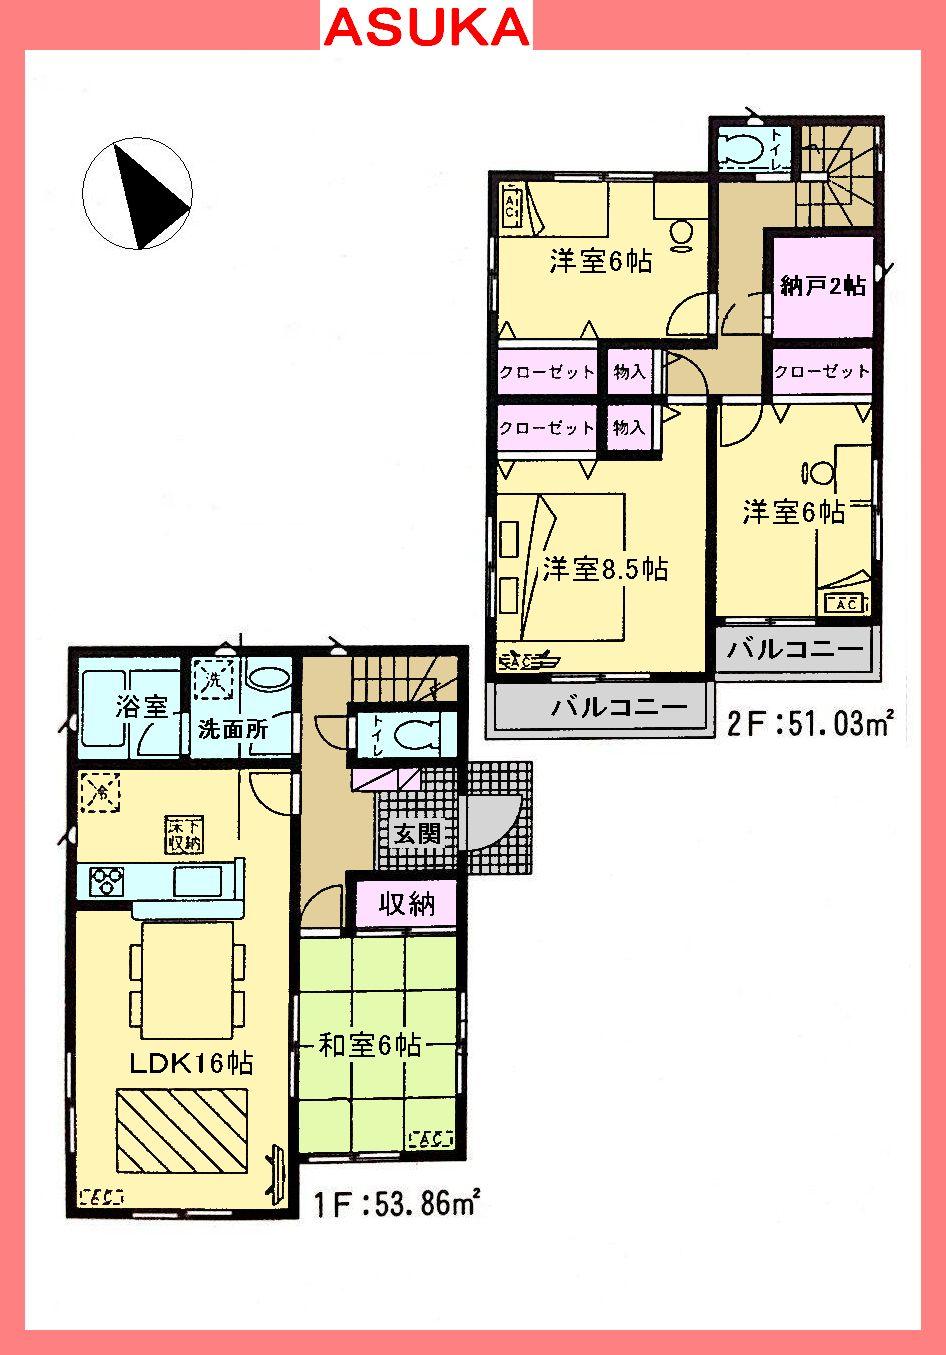 Floor plan. Price 39,800,000 yen, 4LDK+S, Land area 141 sq m , Building area 104.89 sq m